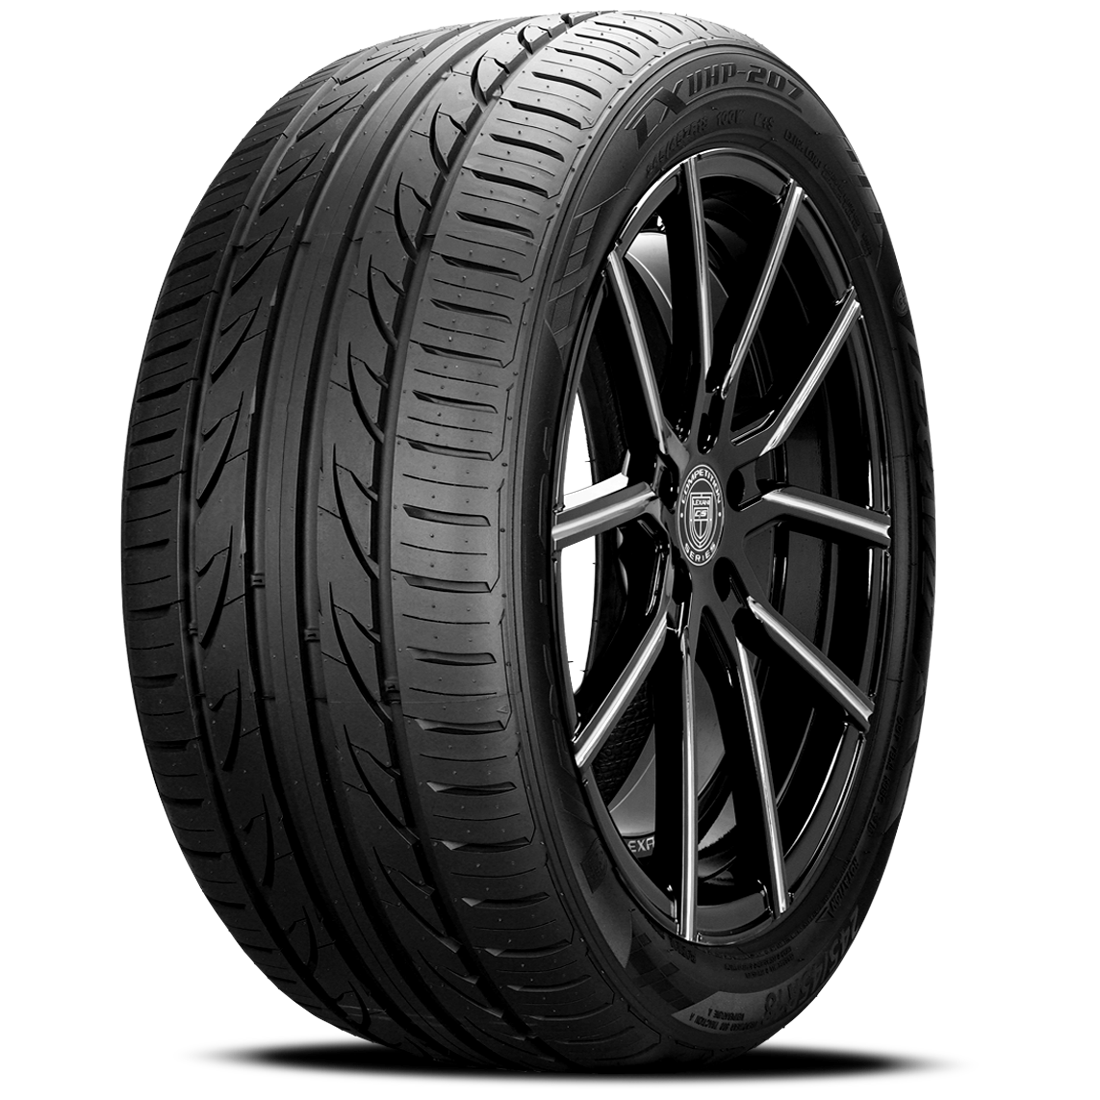 LEXANI LXUHP-207 215/35ZR18 (23.9X8.5R 18) Tires